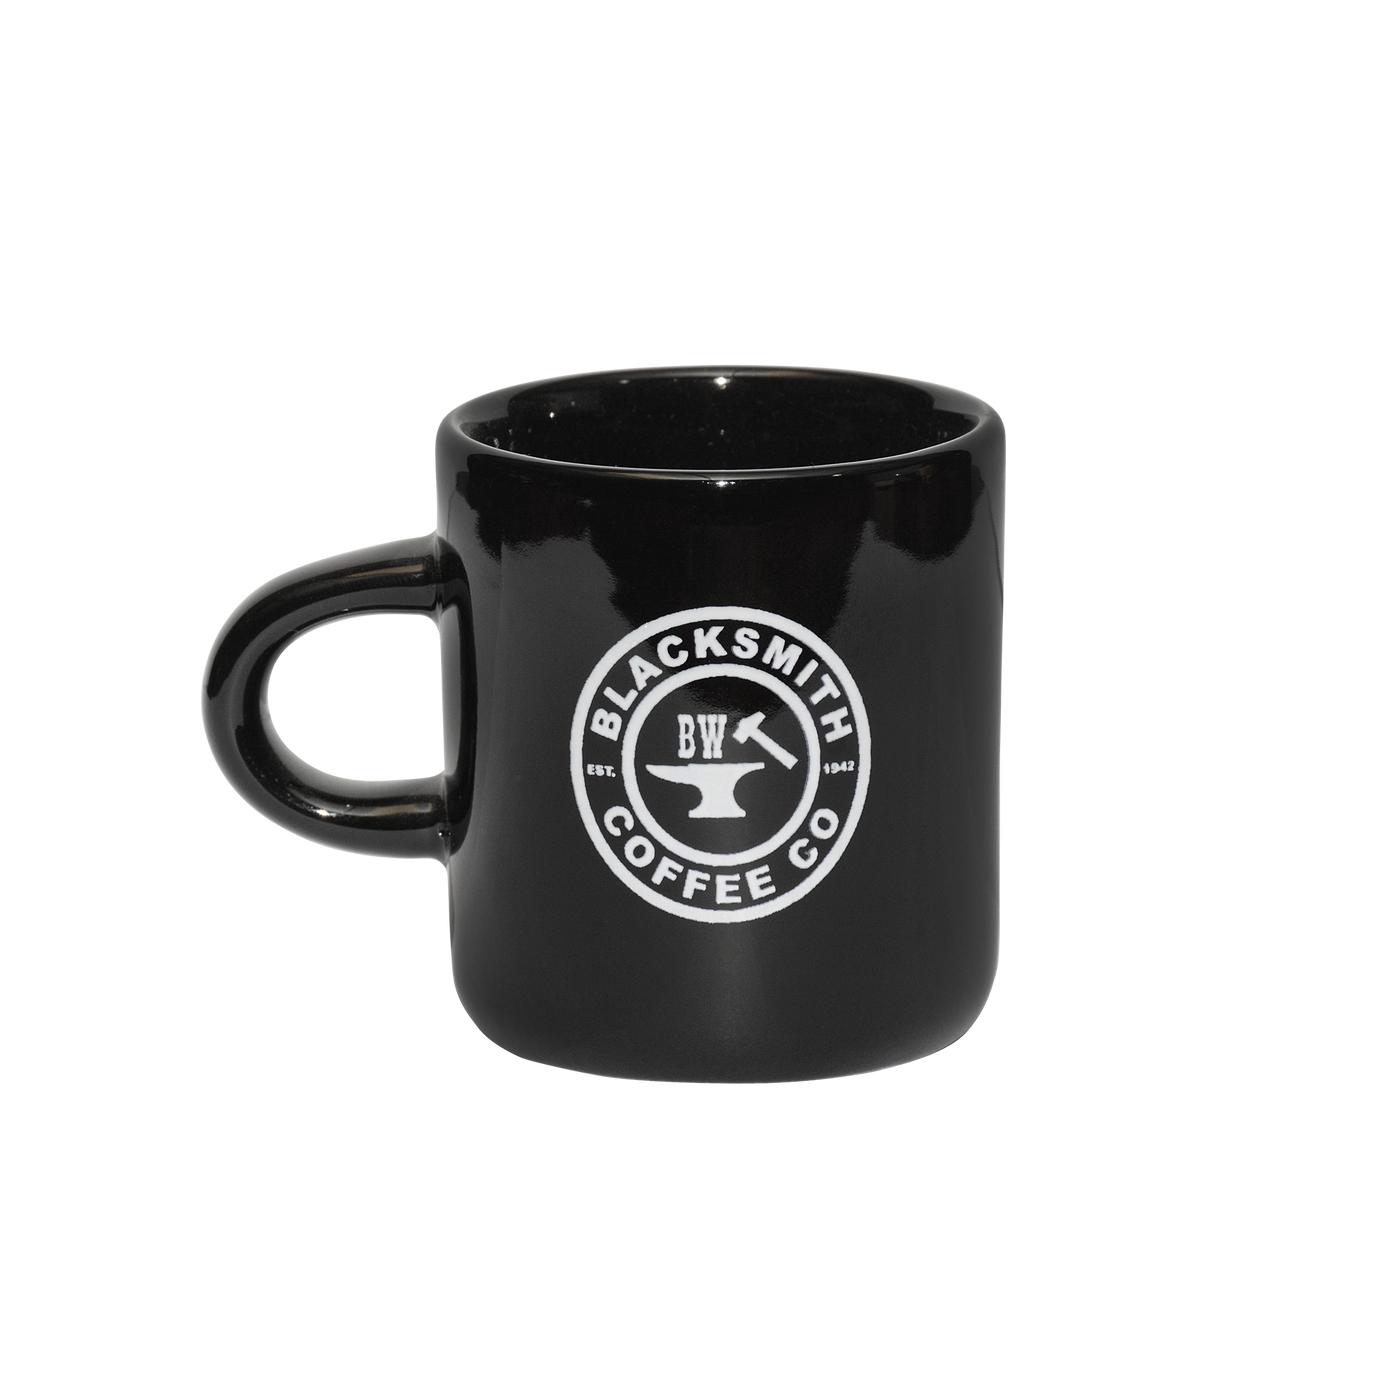 BW (Small Espresso) Ceramic 3 oz. Coffee Mug-Black